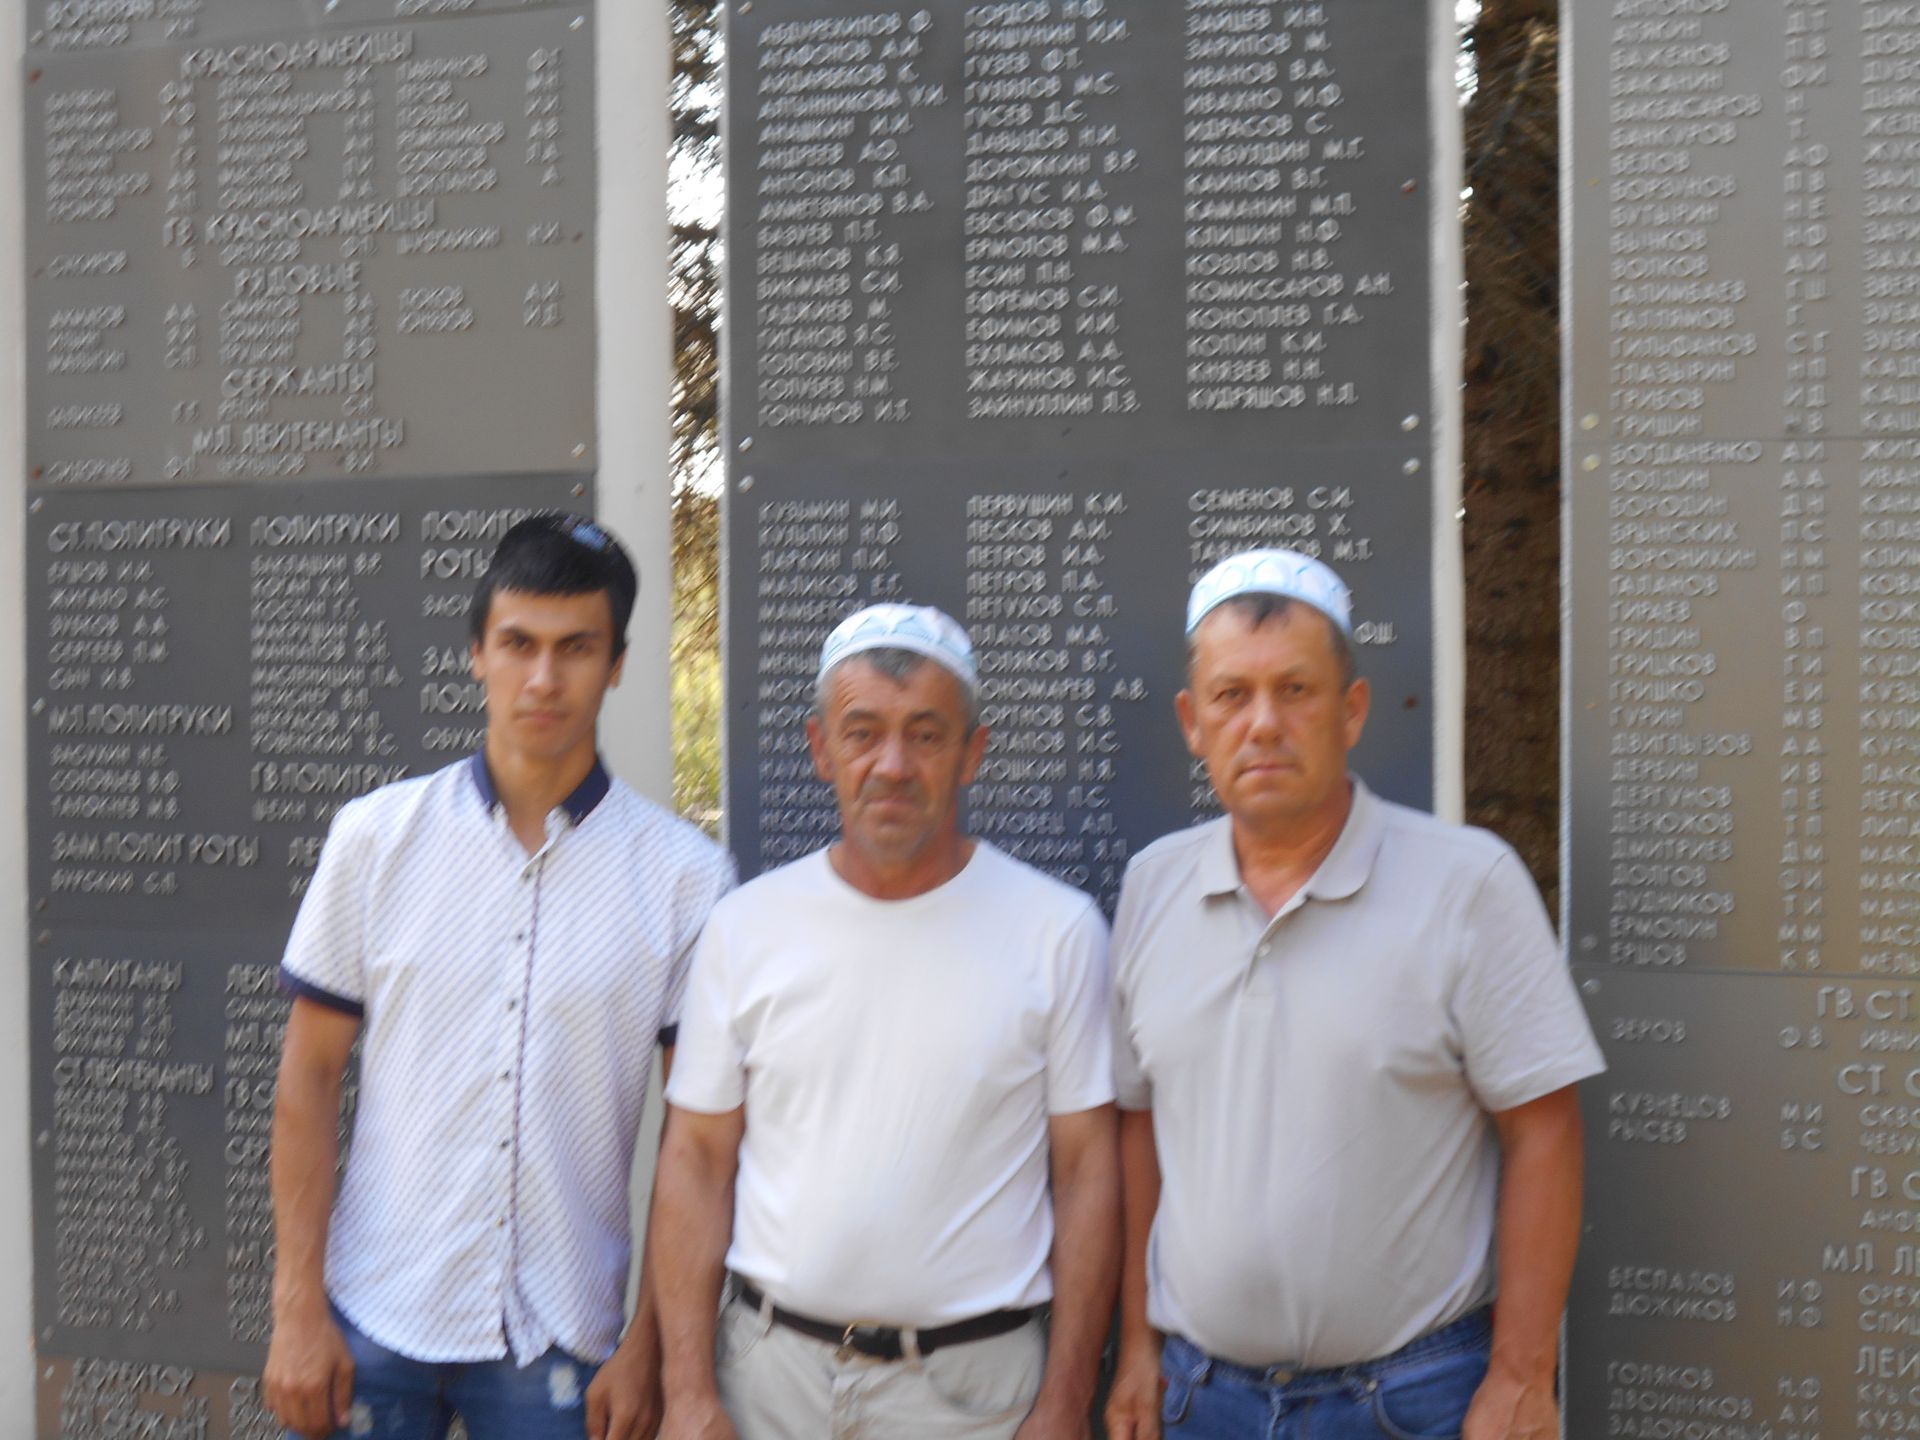 Буада хәбәрсез югалган фронтовикның “похоронкасы” 76 ел хәрби комиссариатта яткан